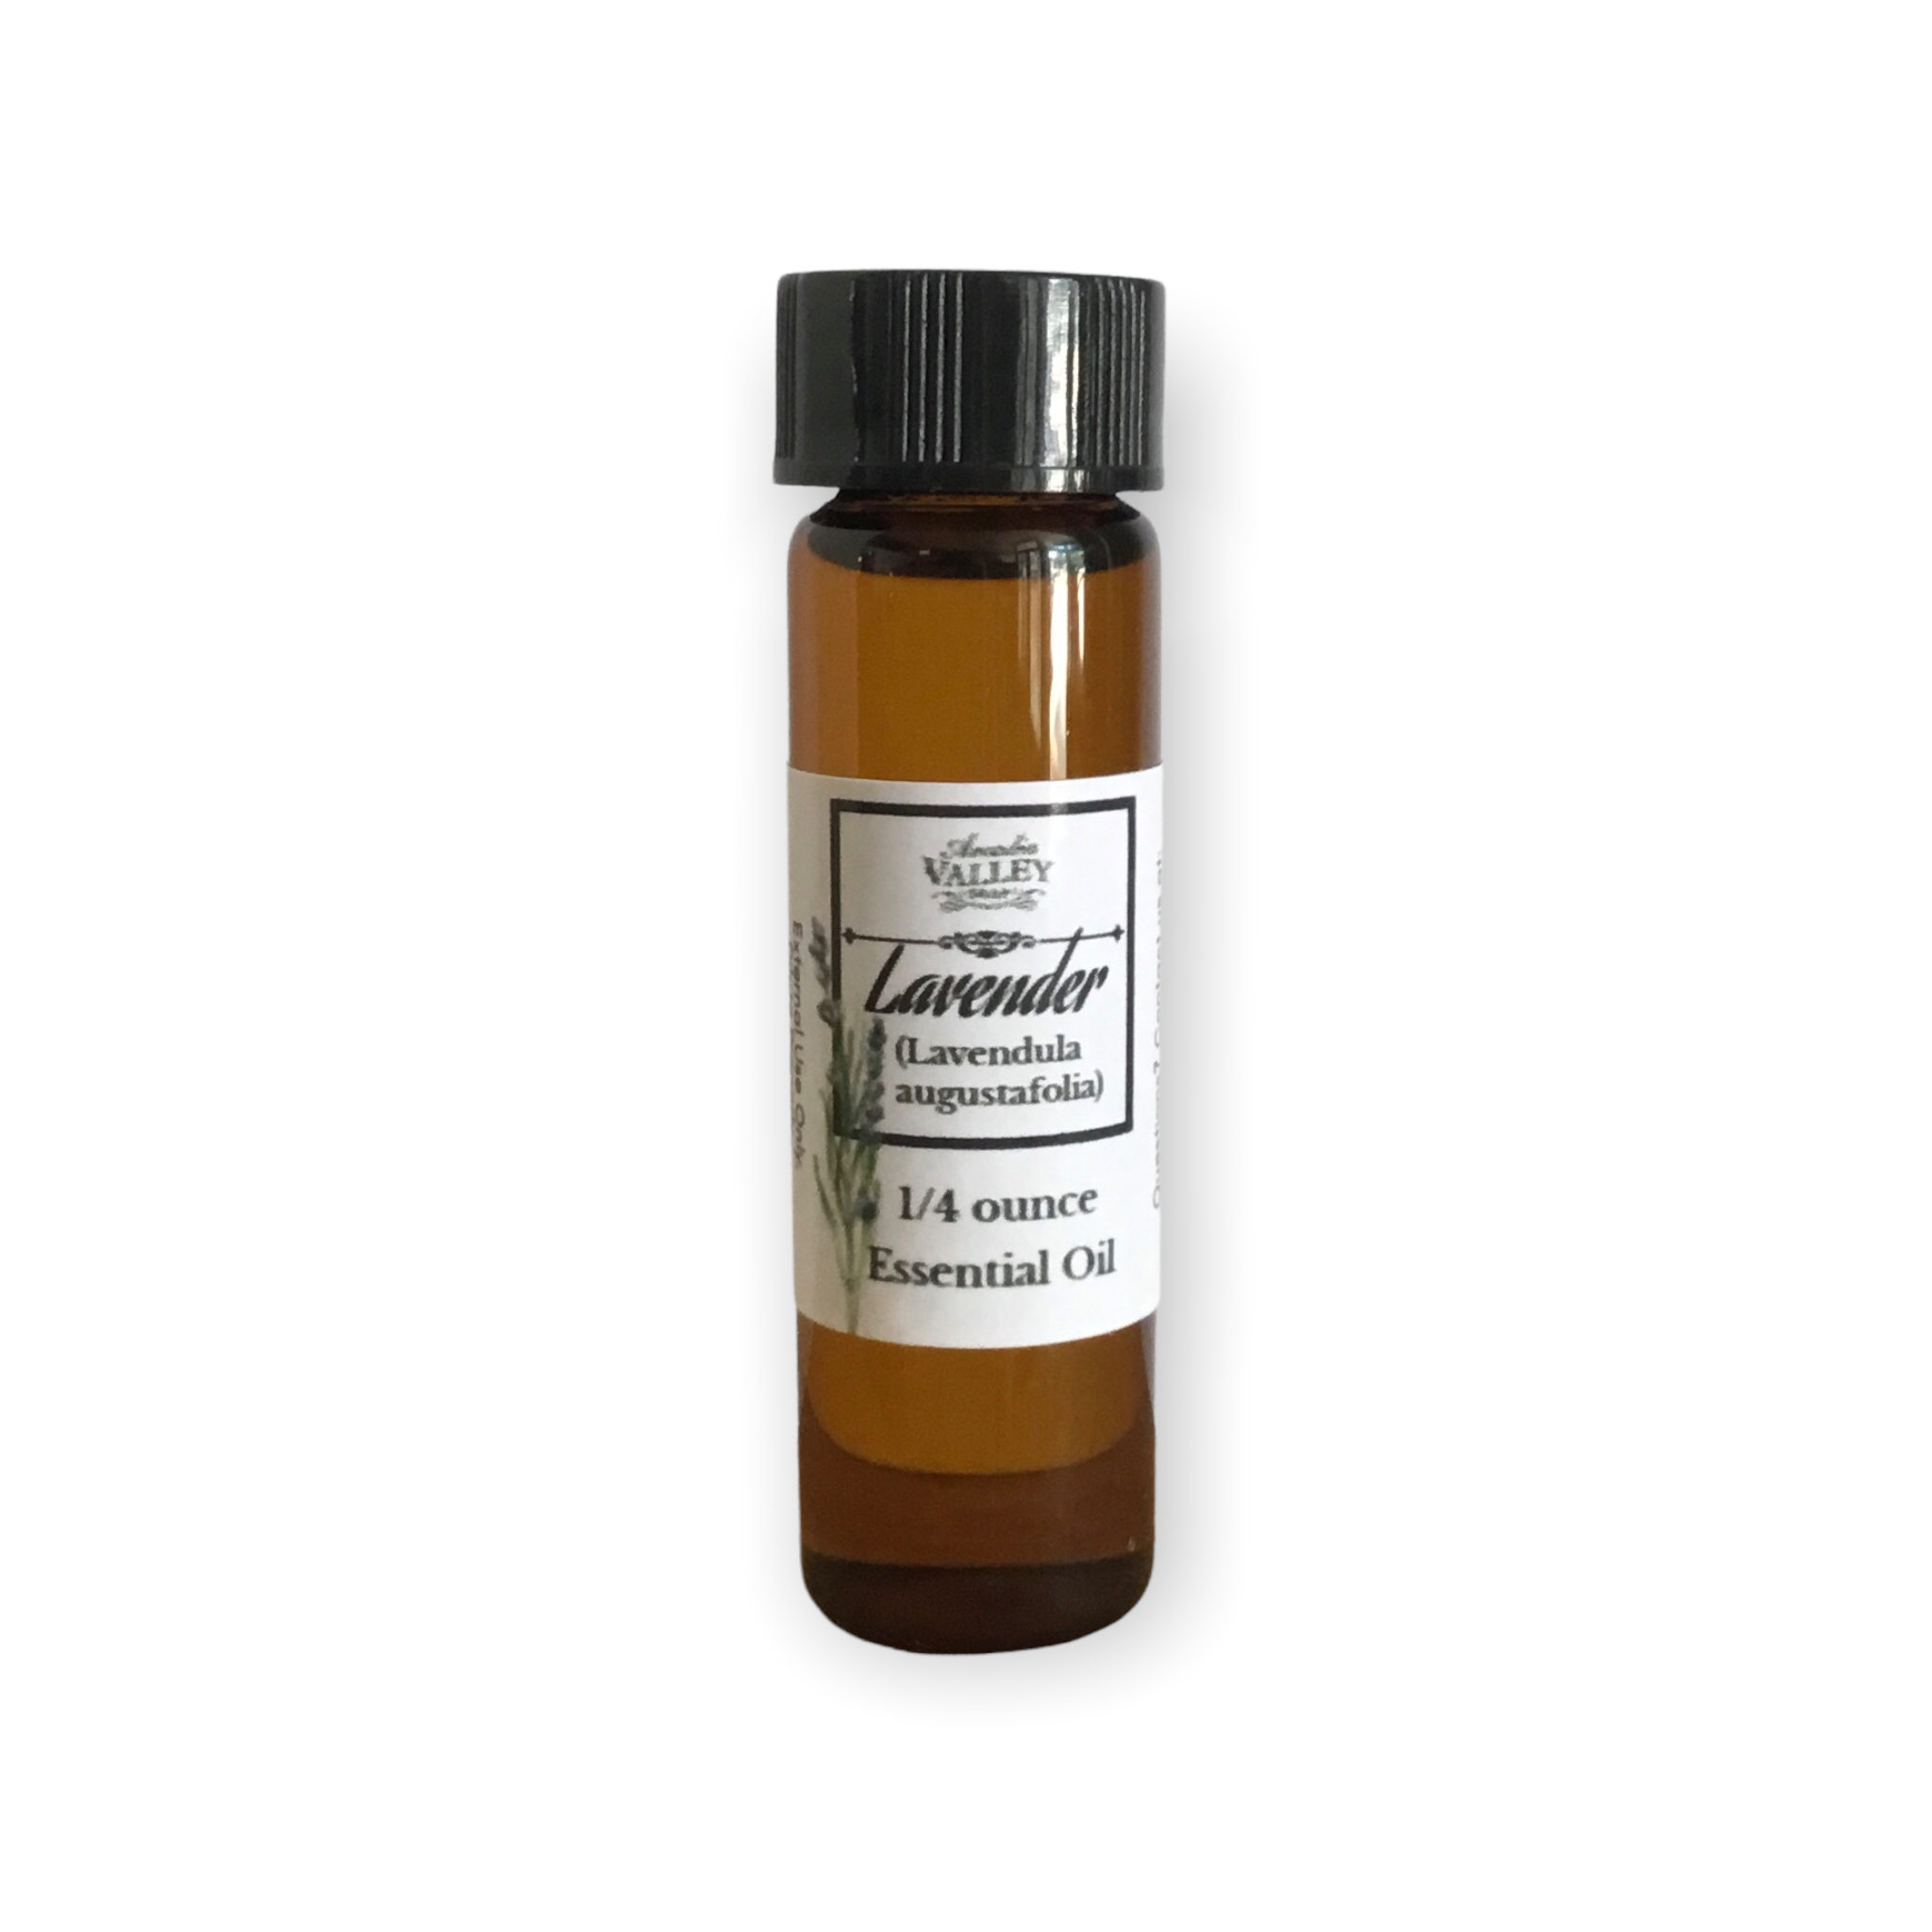 Lavender Essential Oil - 1/4 ounce